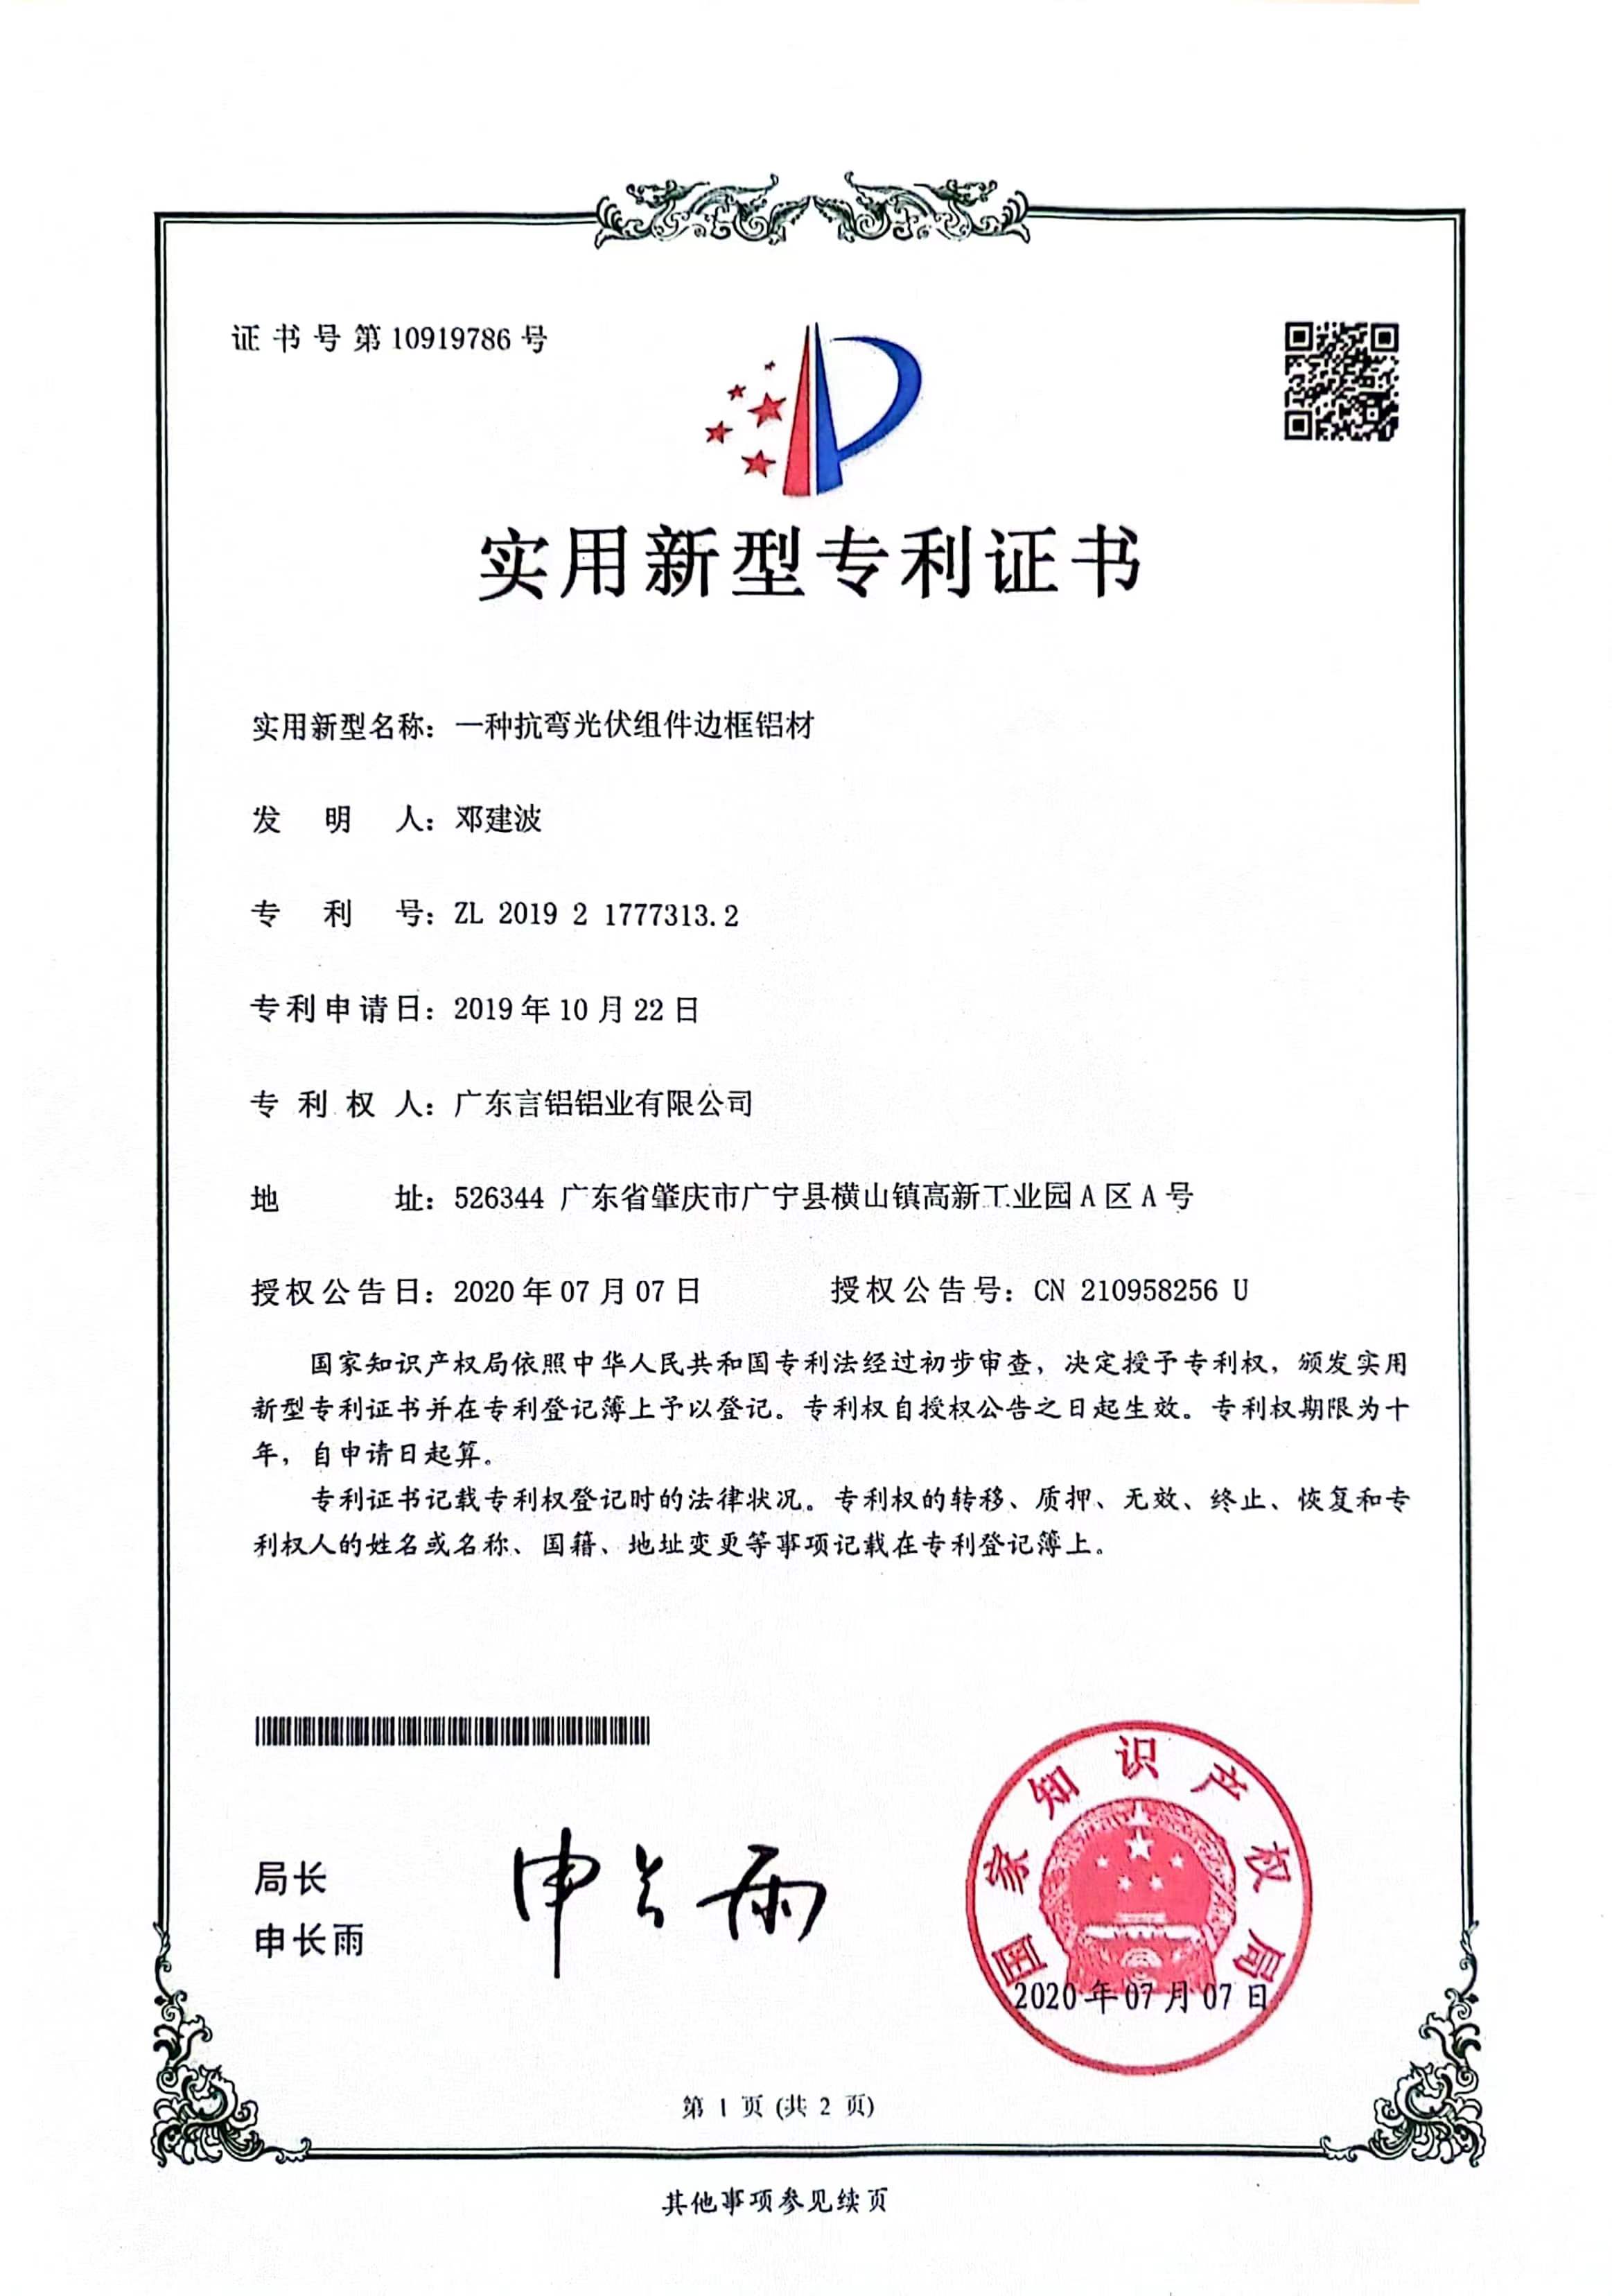 Patent certificate 2.jpg